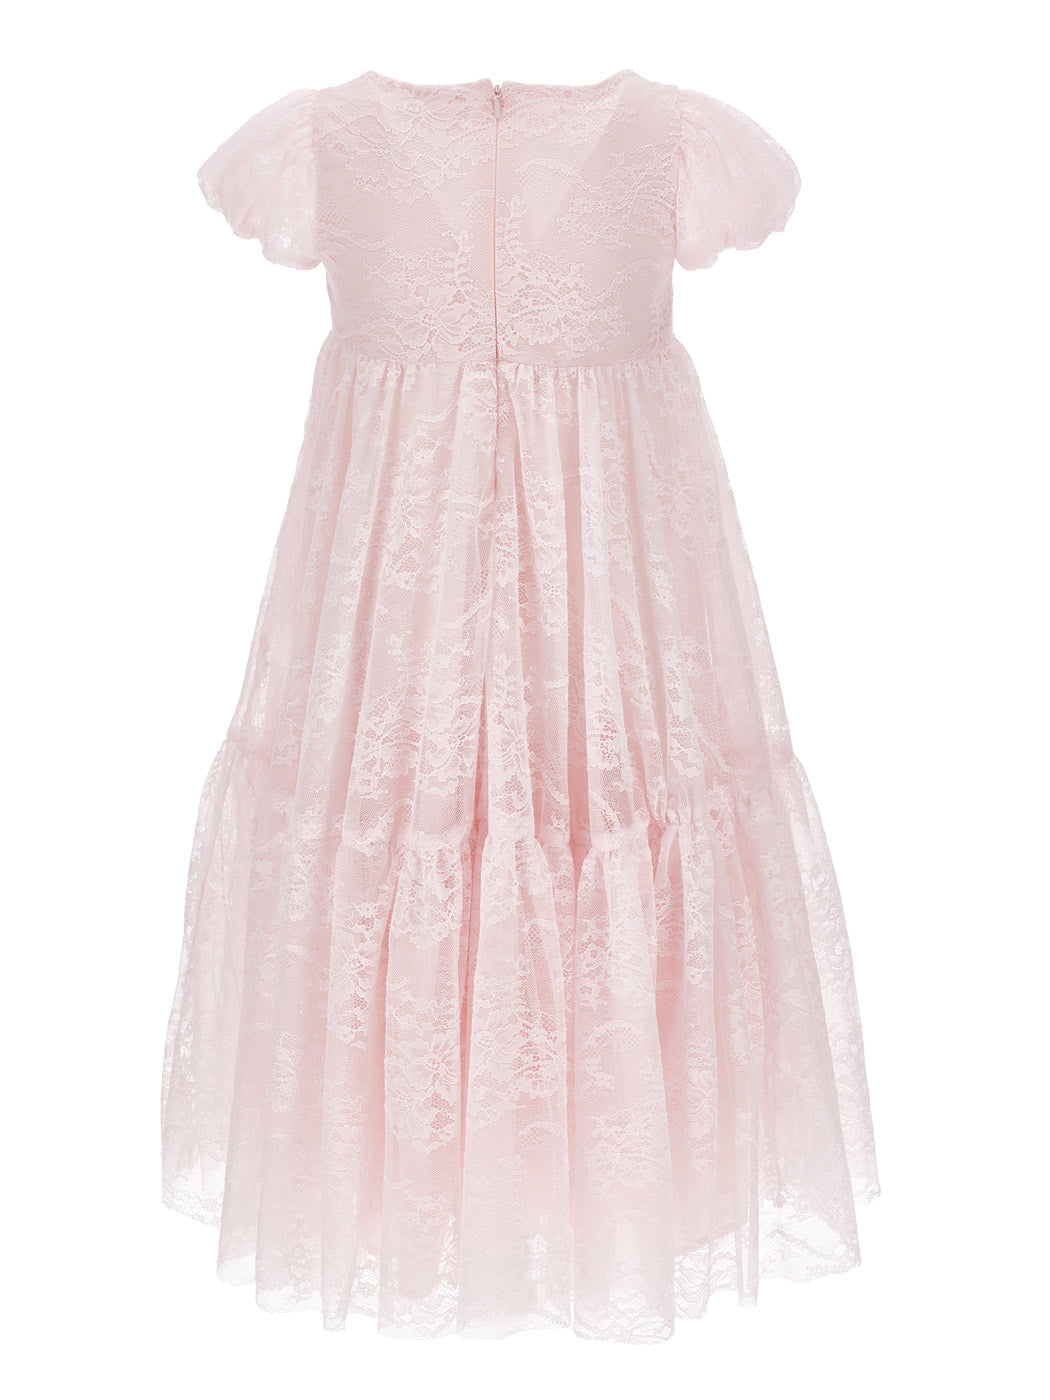 Girls floral lace dress-71C919 Pink